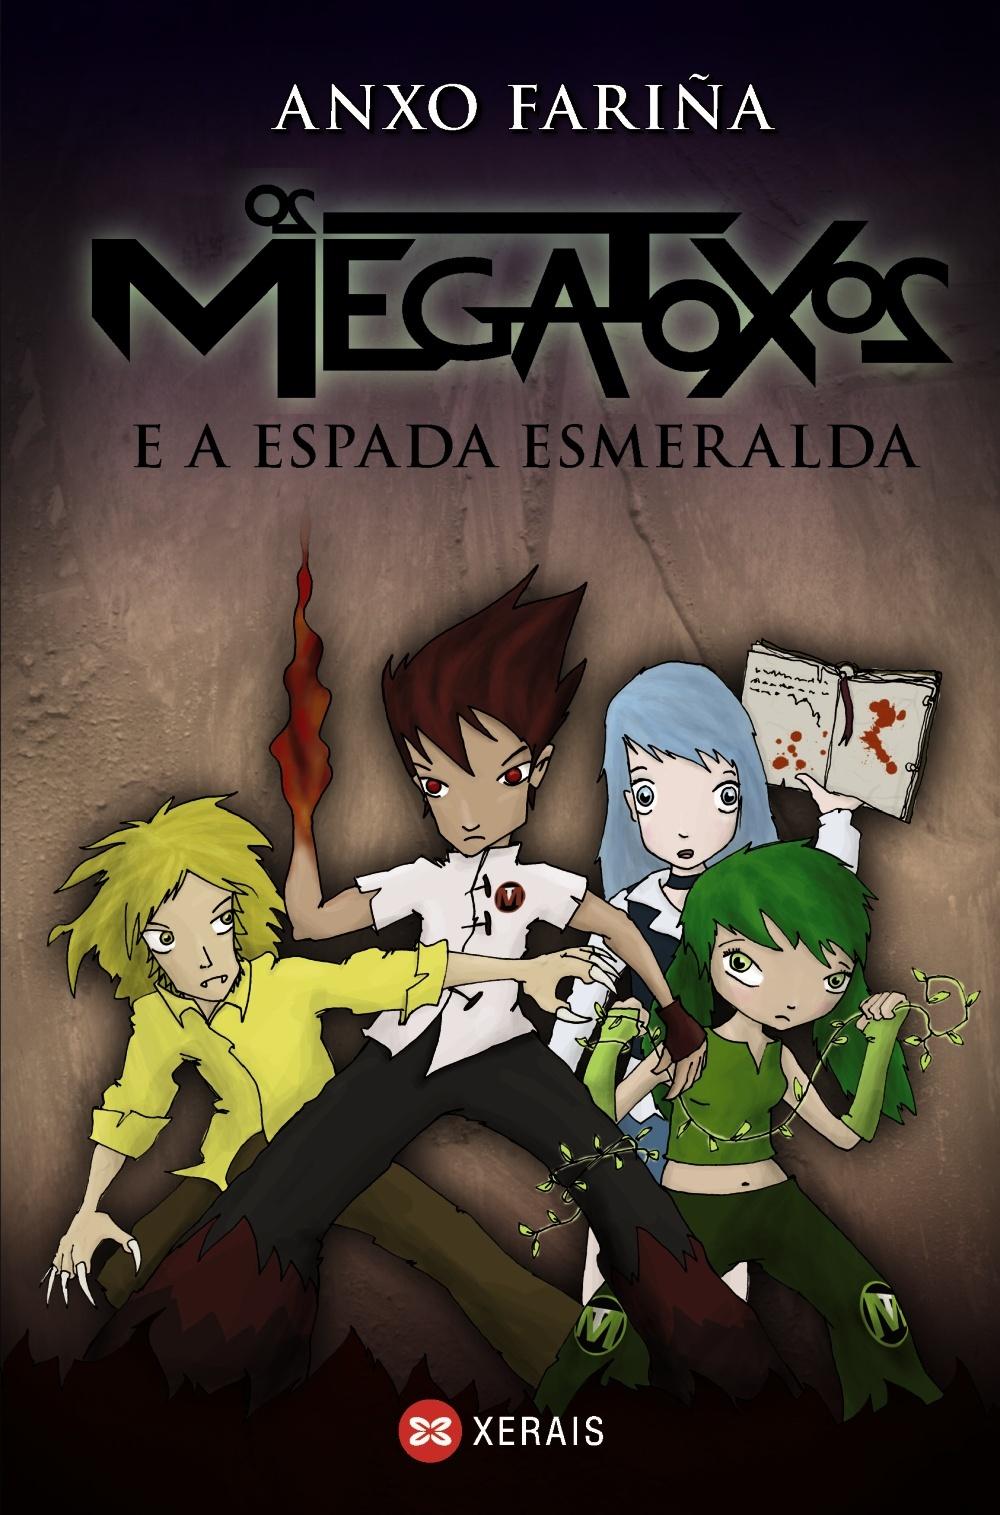 Foto Os Megatoxos e a espada esmeralda